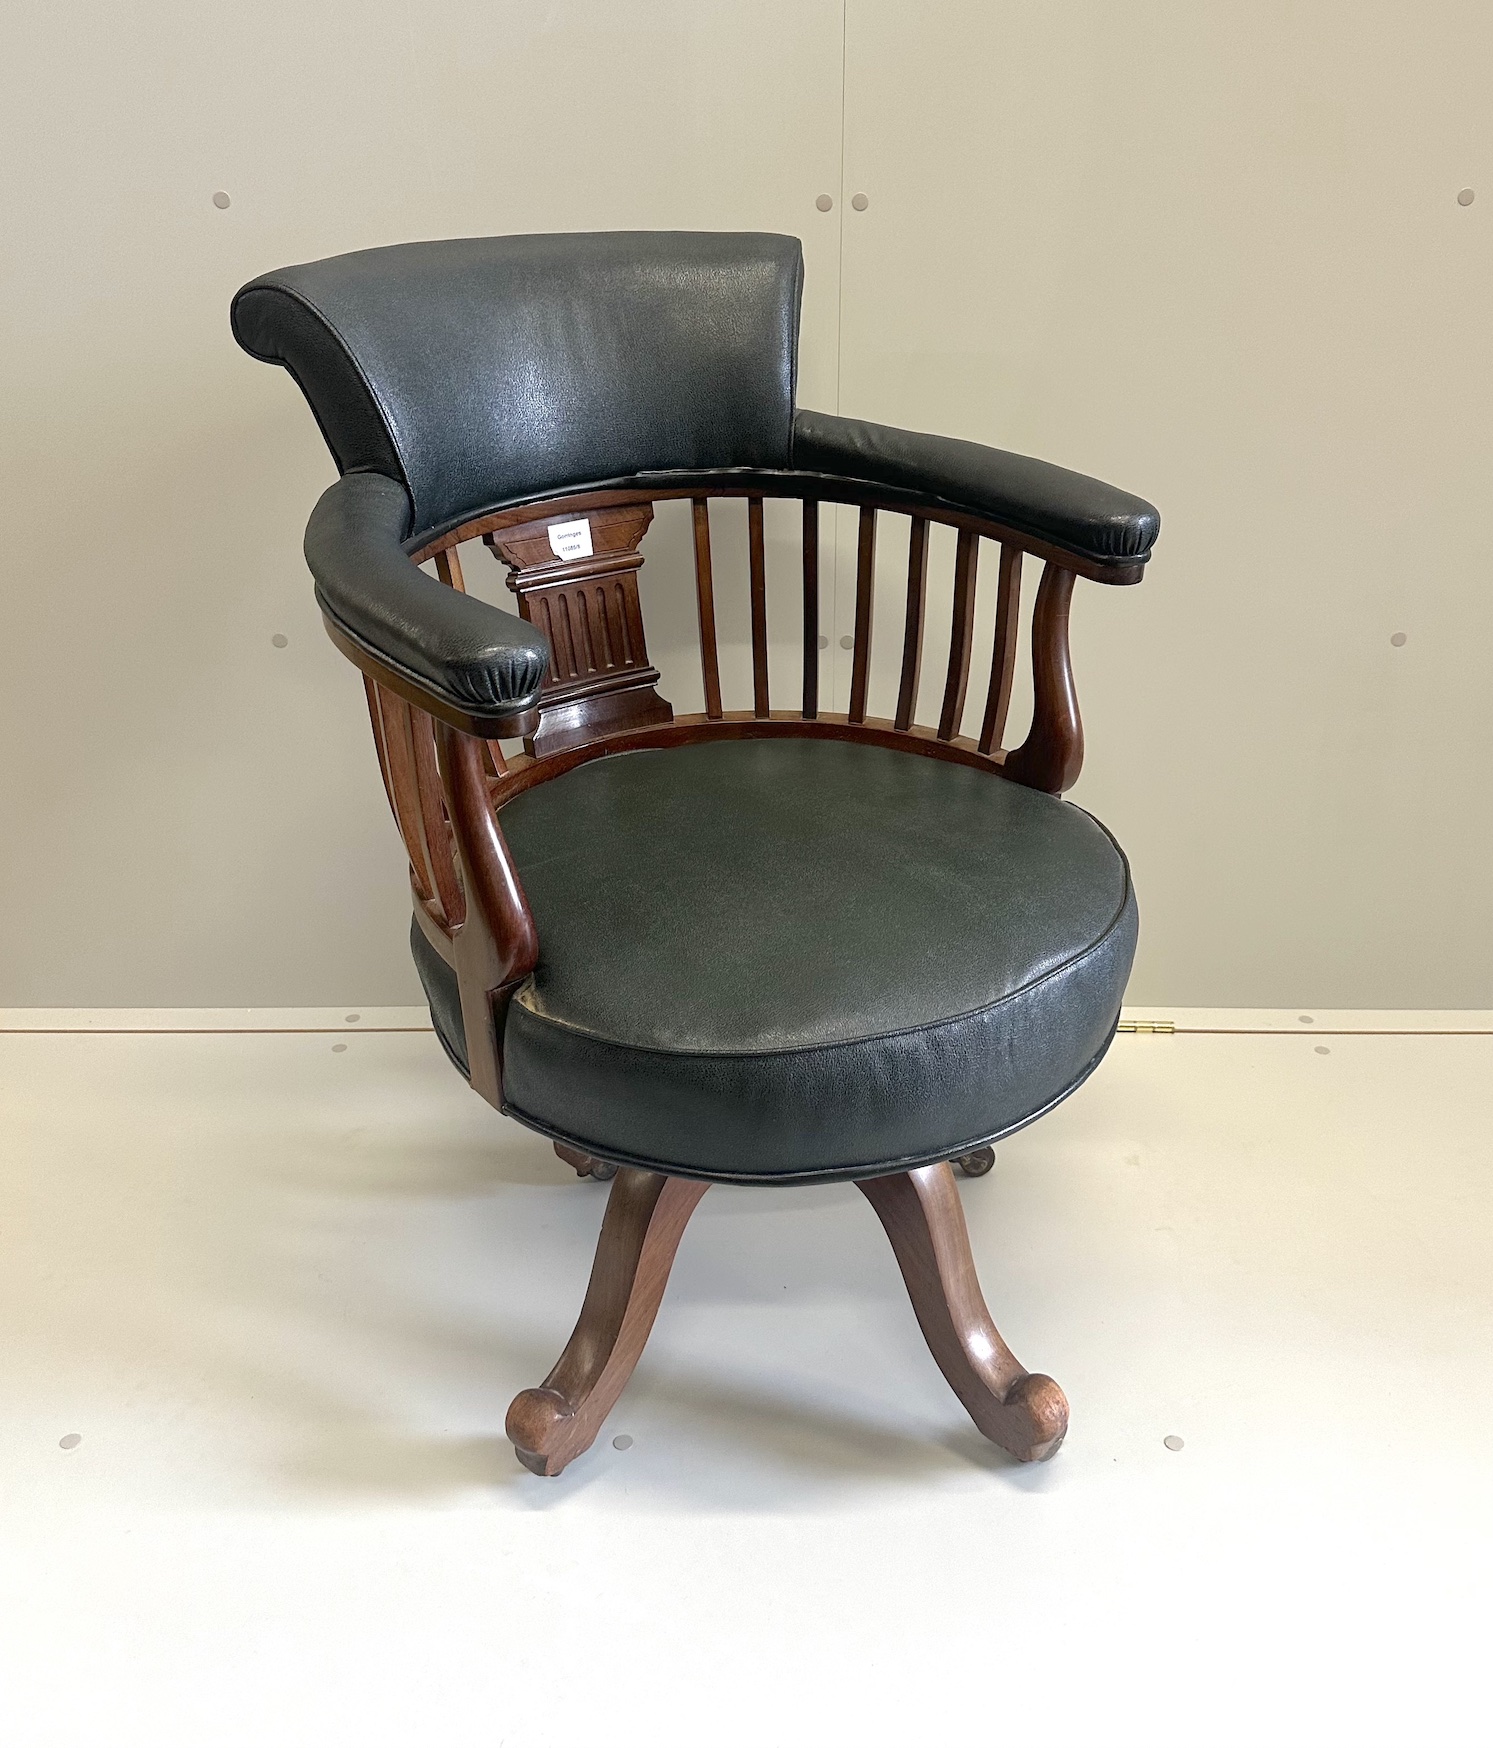 A late Victorian walnut swivel desk chair, width 60cm, depth 55cm, height 87cm